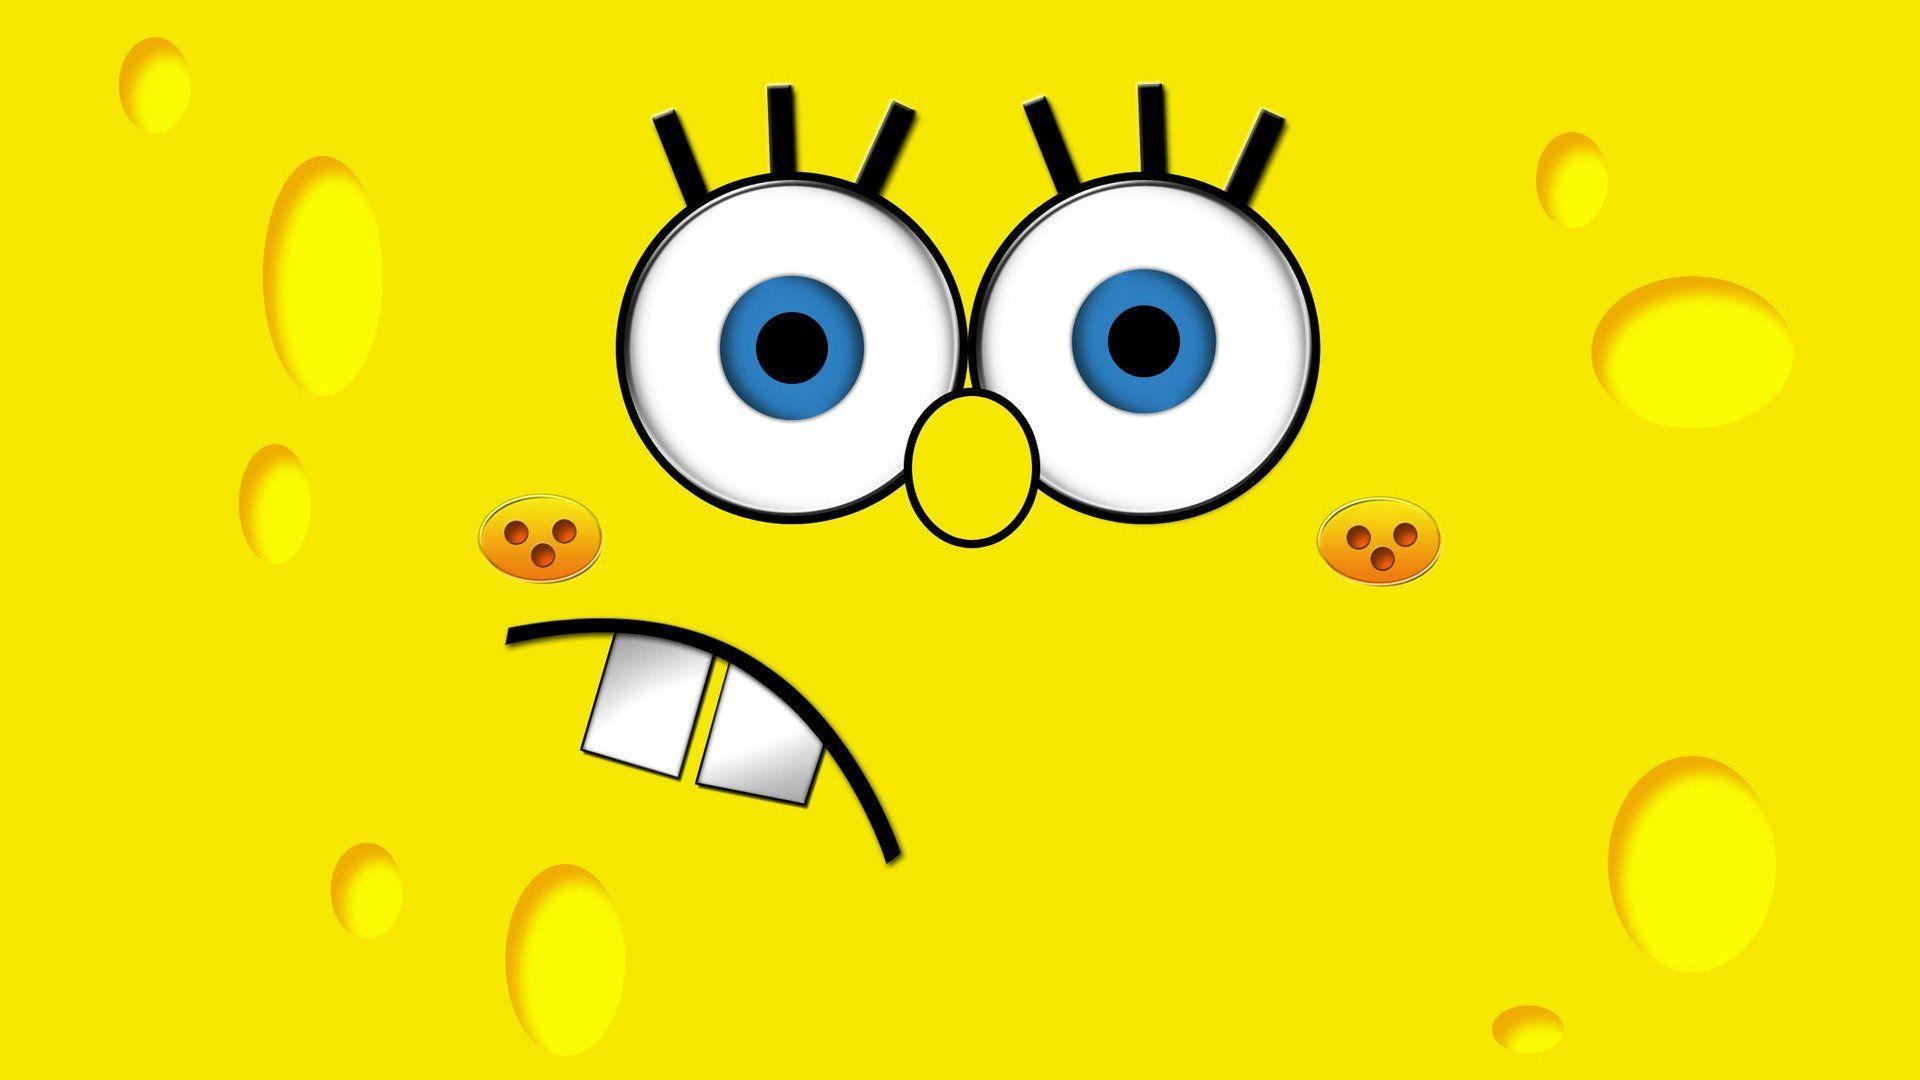 Spongebob Cartoon HD Image Wallpaper